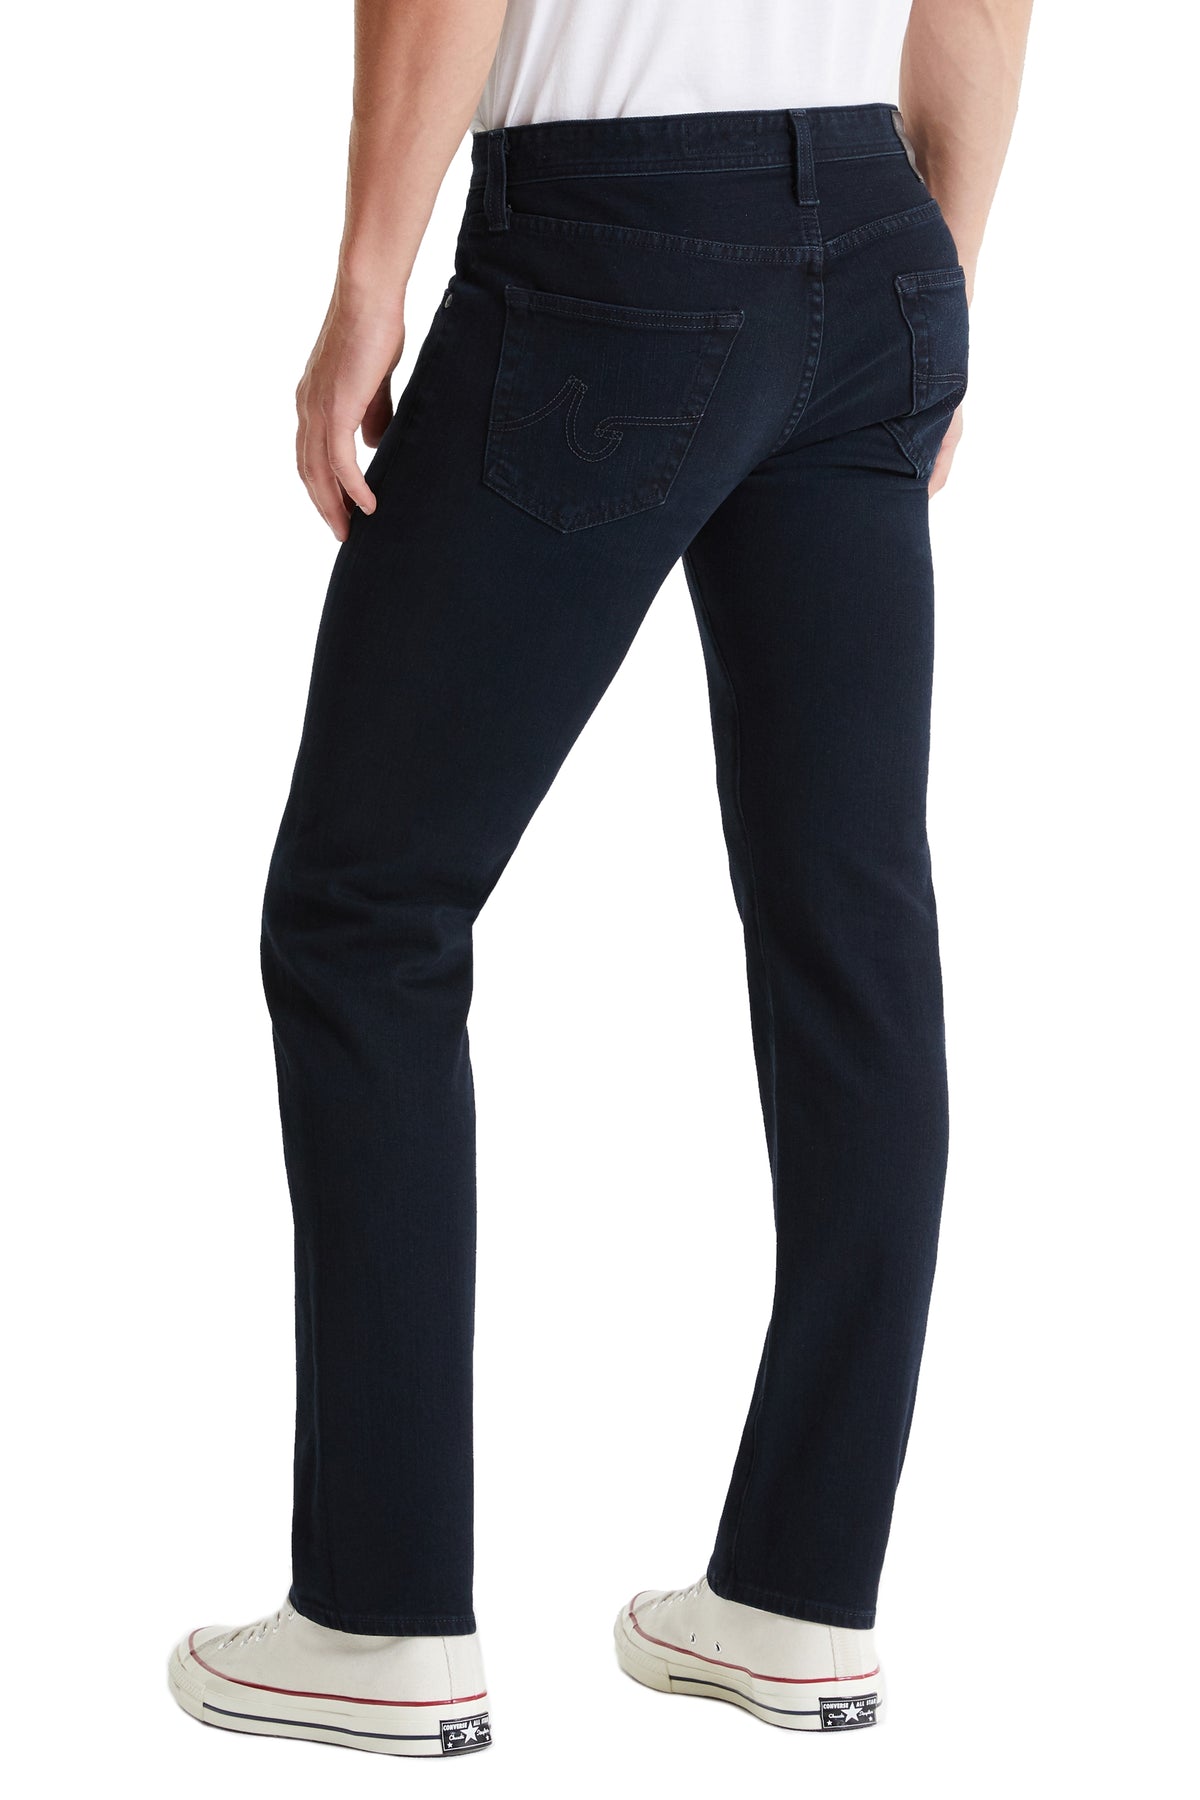 Soft Brushed Flexx Seattle Thread Denim Superstretch Company – Jeans MAC